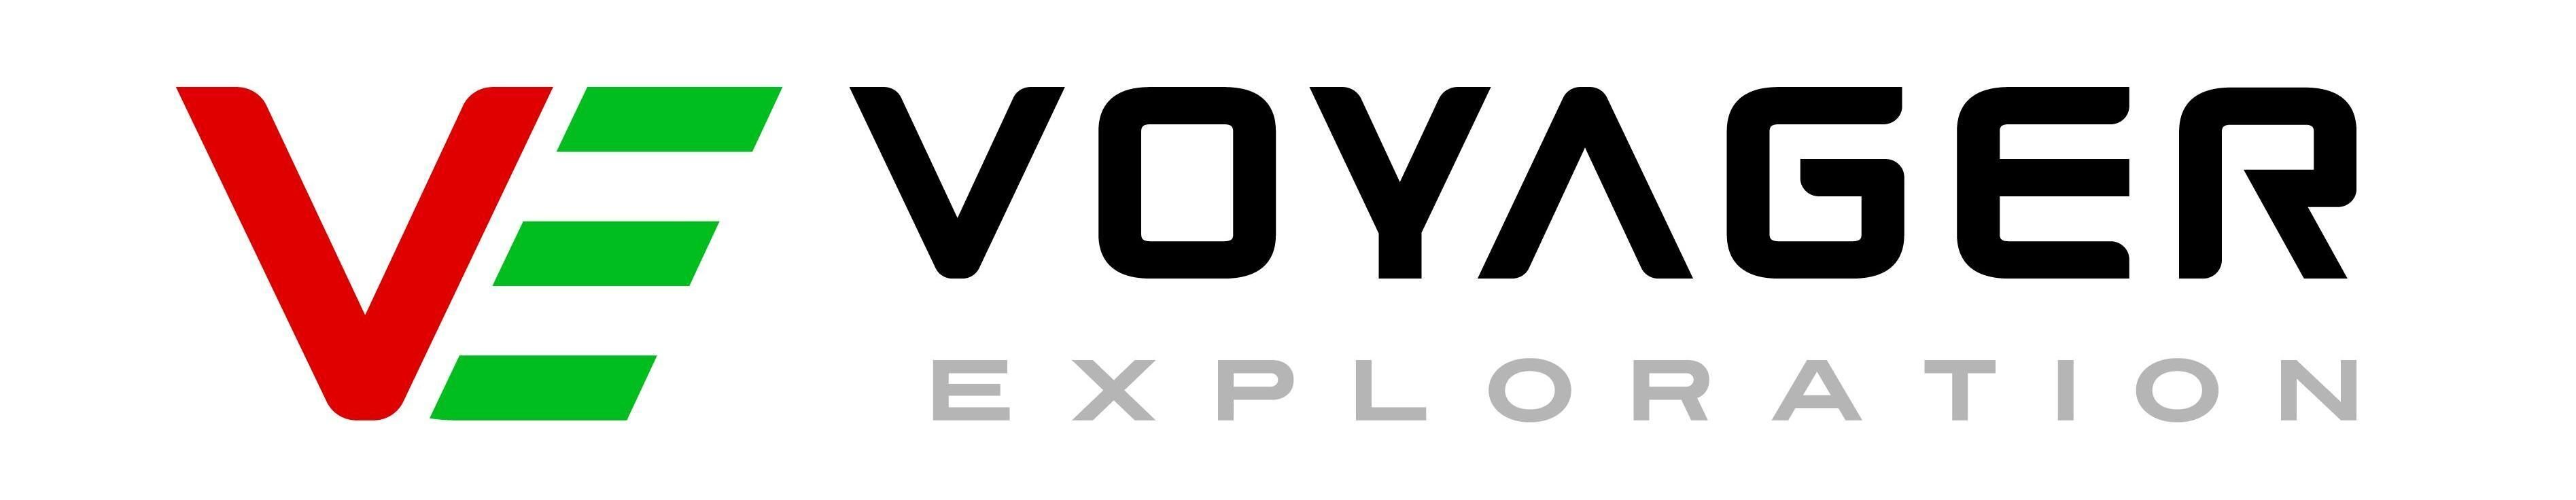 Voyager Exploration, Inc.